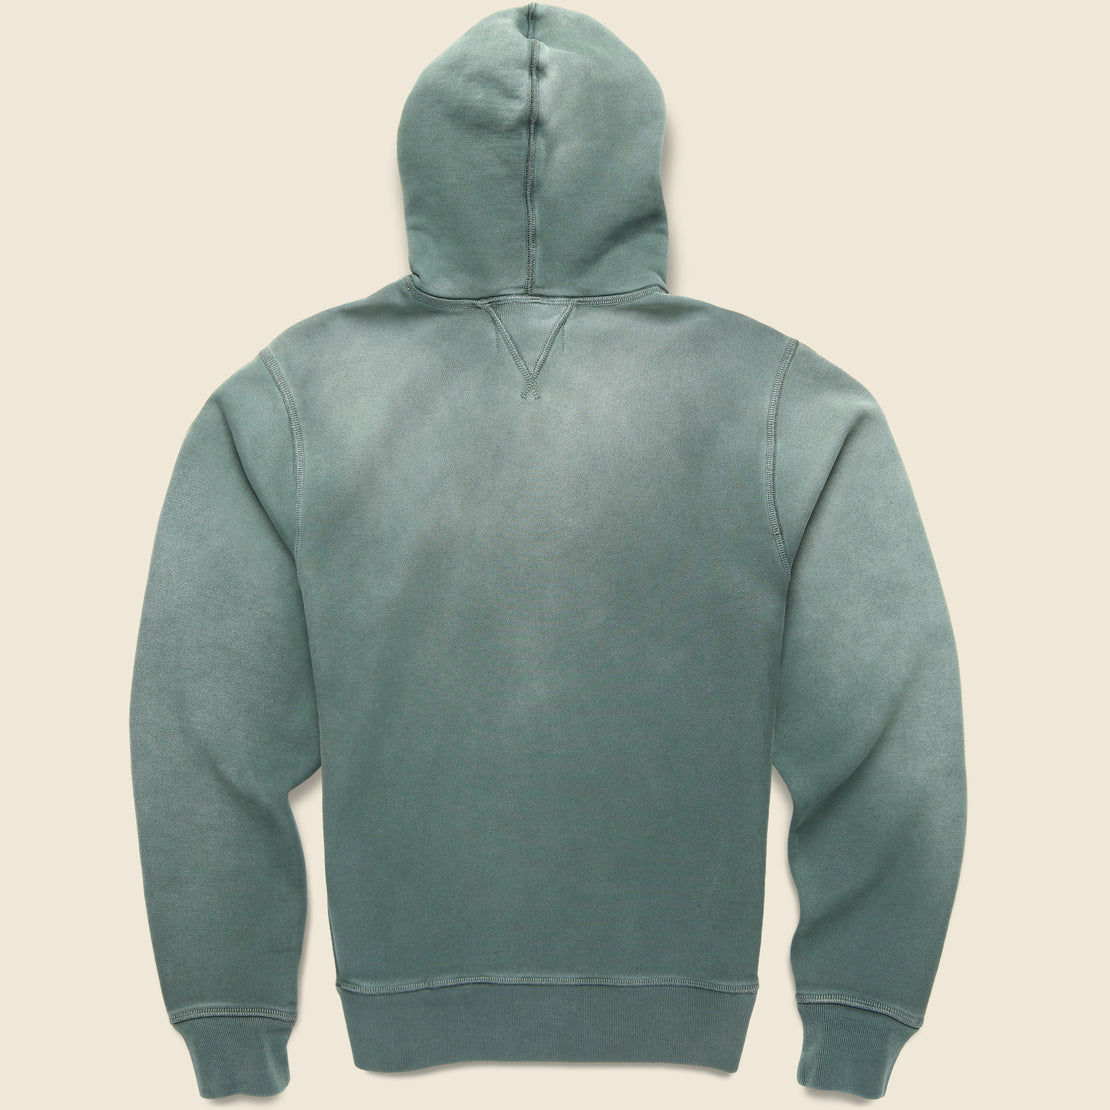 Pullover Hoodie - Collegiate Green - RRL - STAG Provisions - Tops - Fleece / Sweatshirt